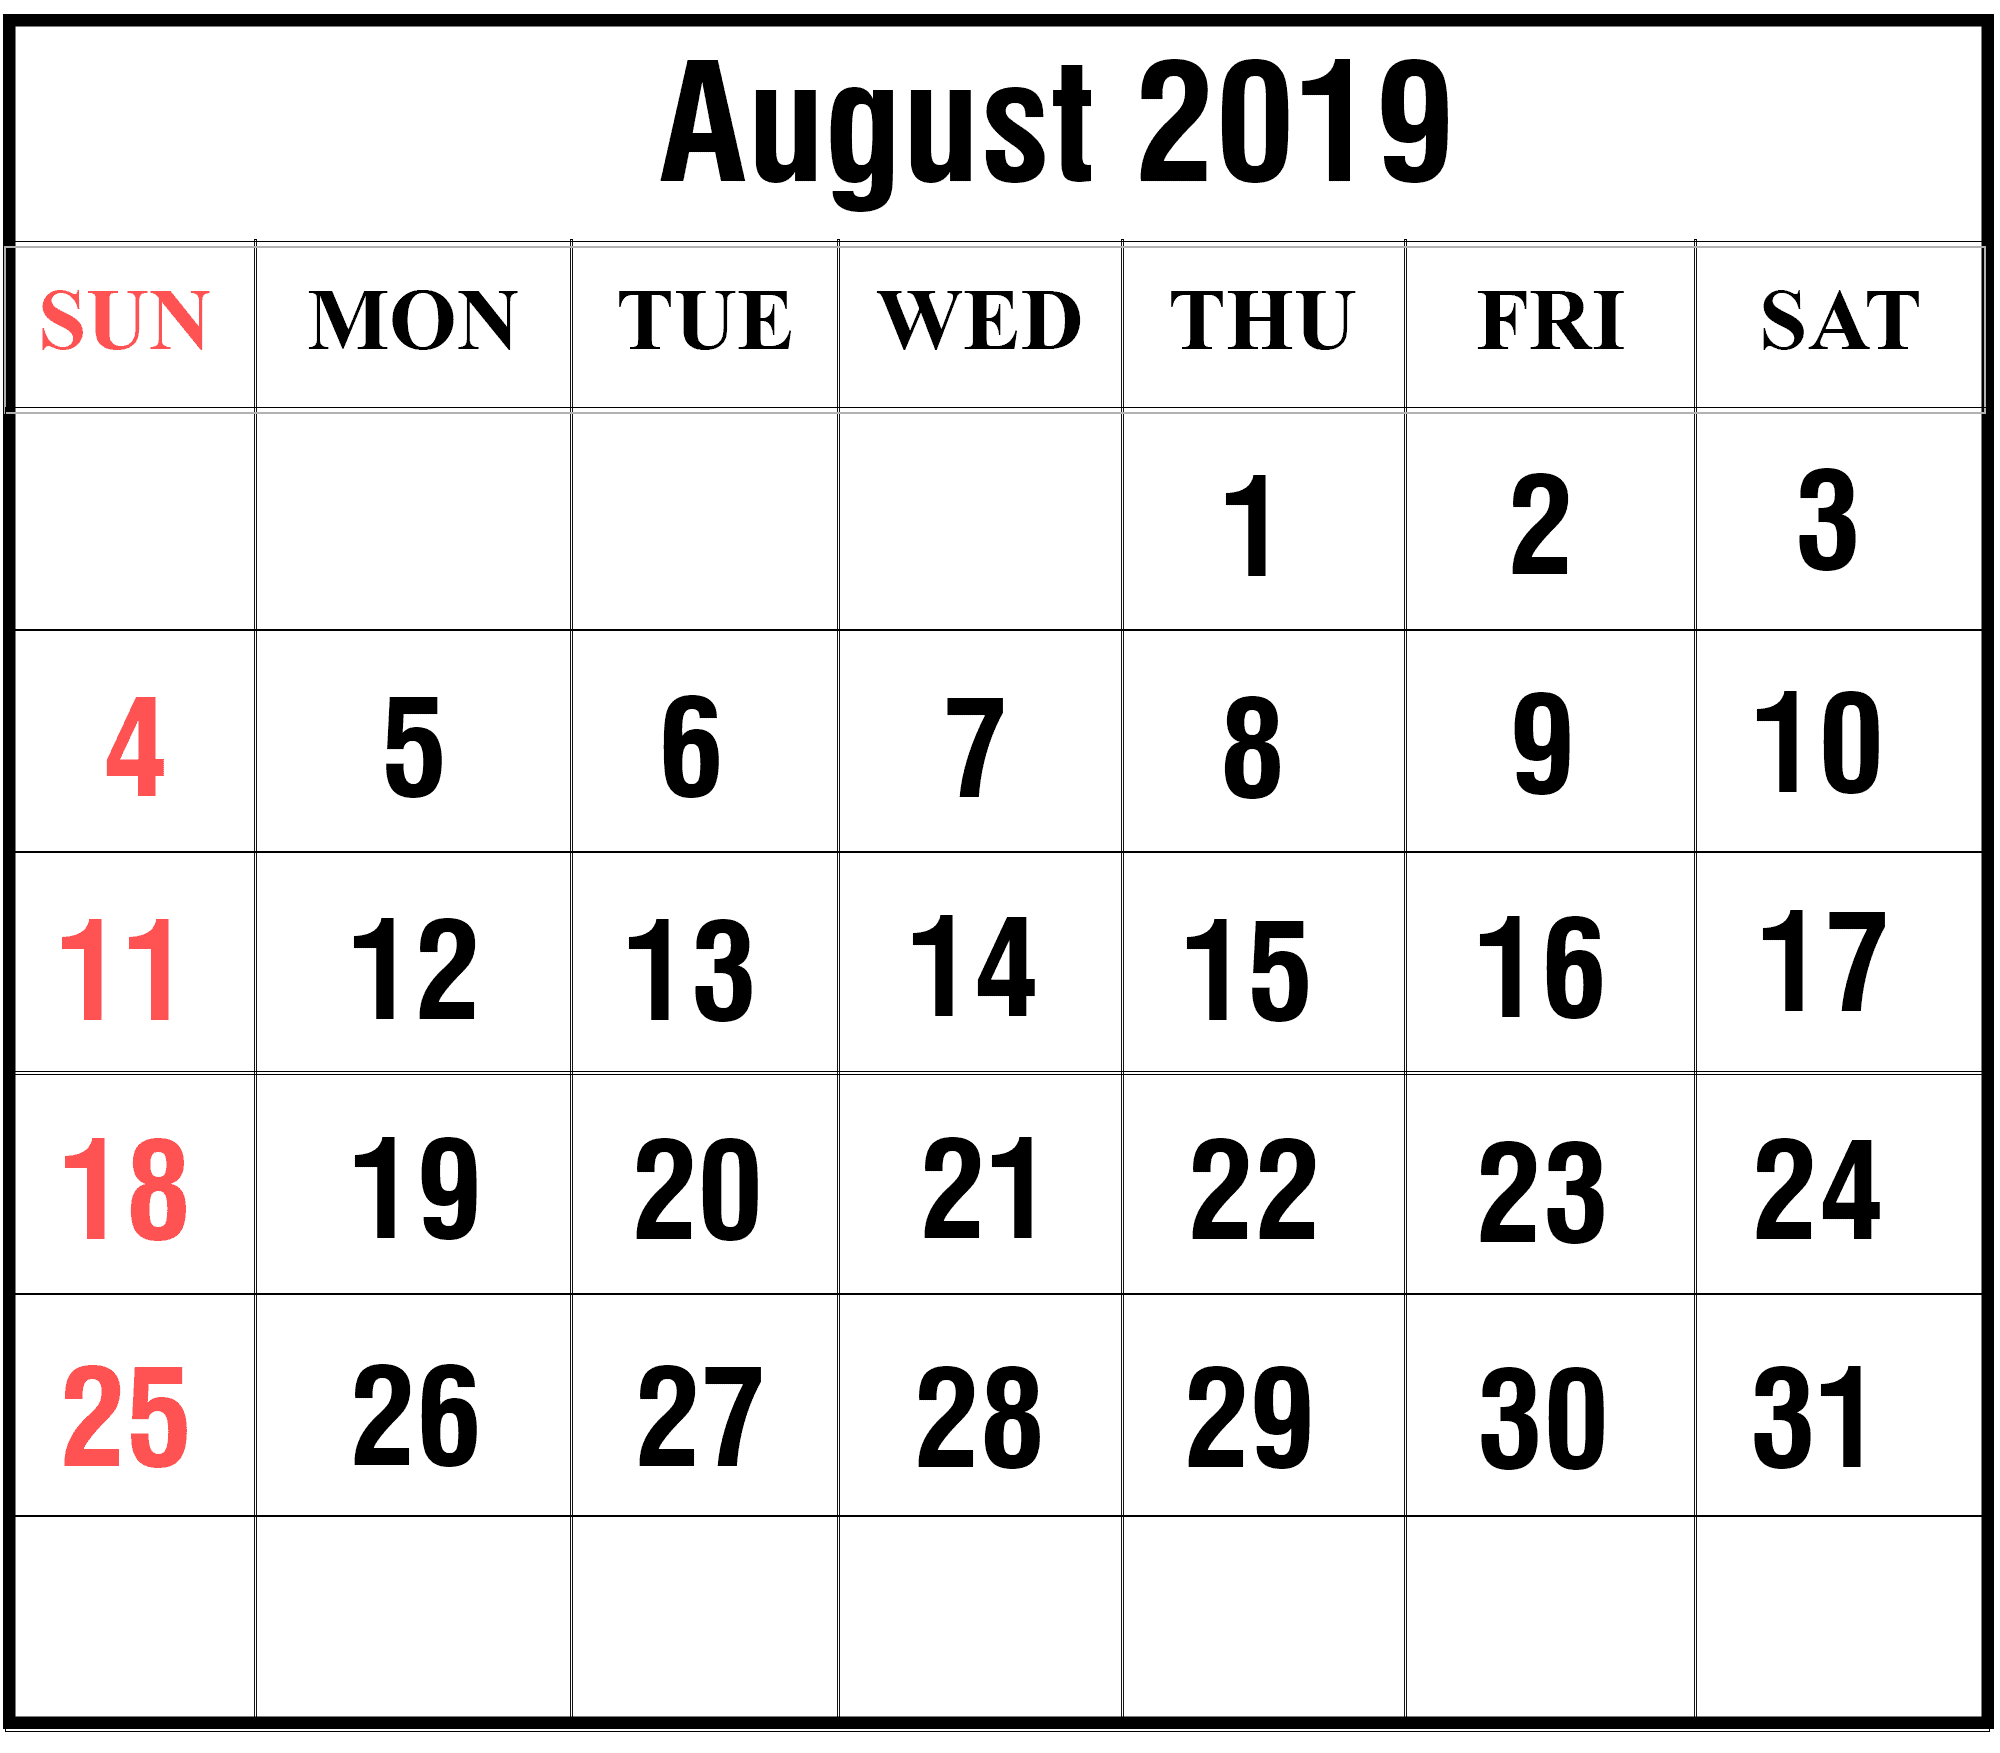 2019 August Holidays Calendar 